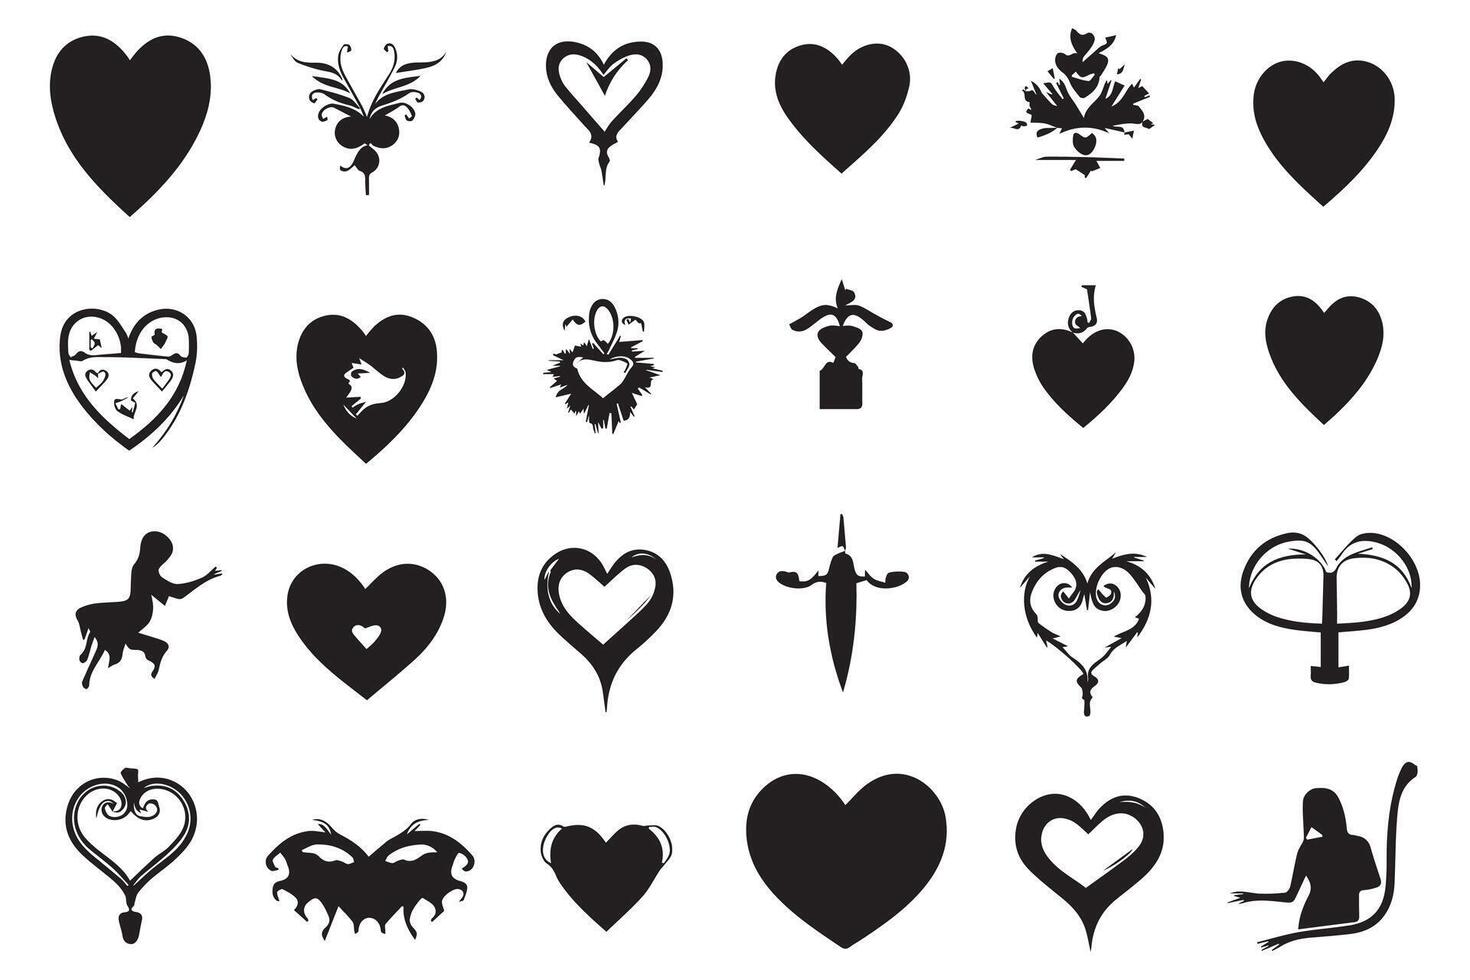 love silhouette design bundle set free vector